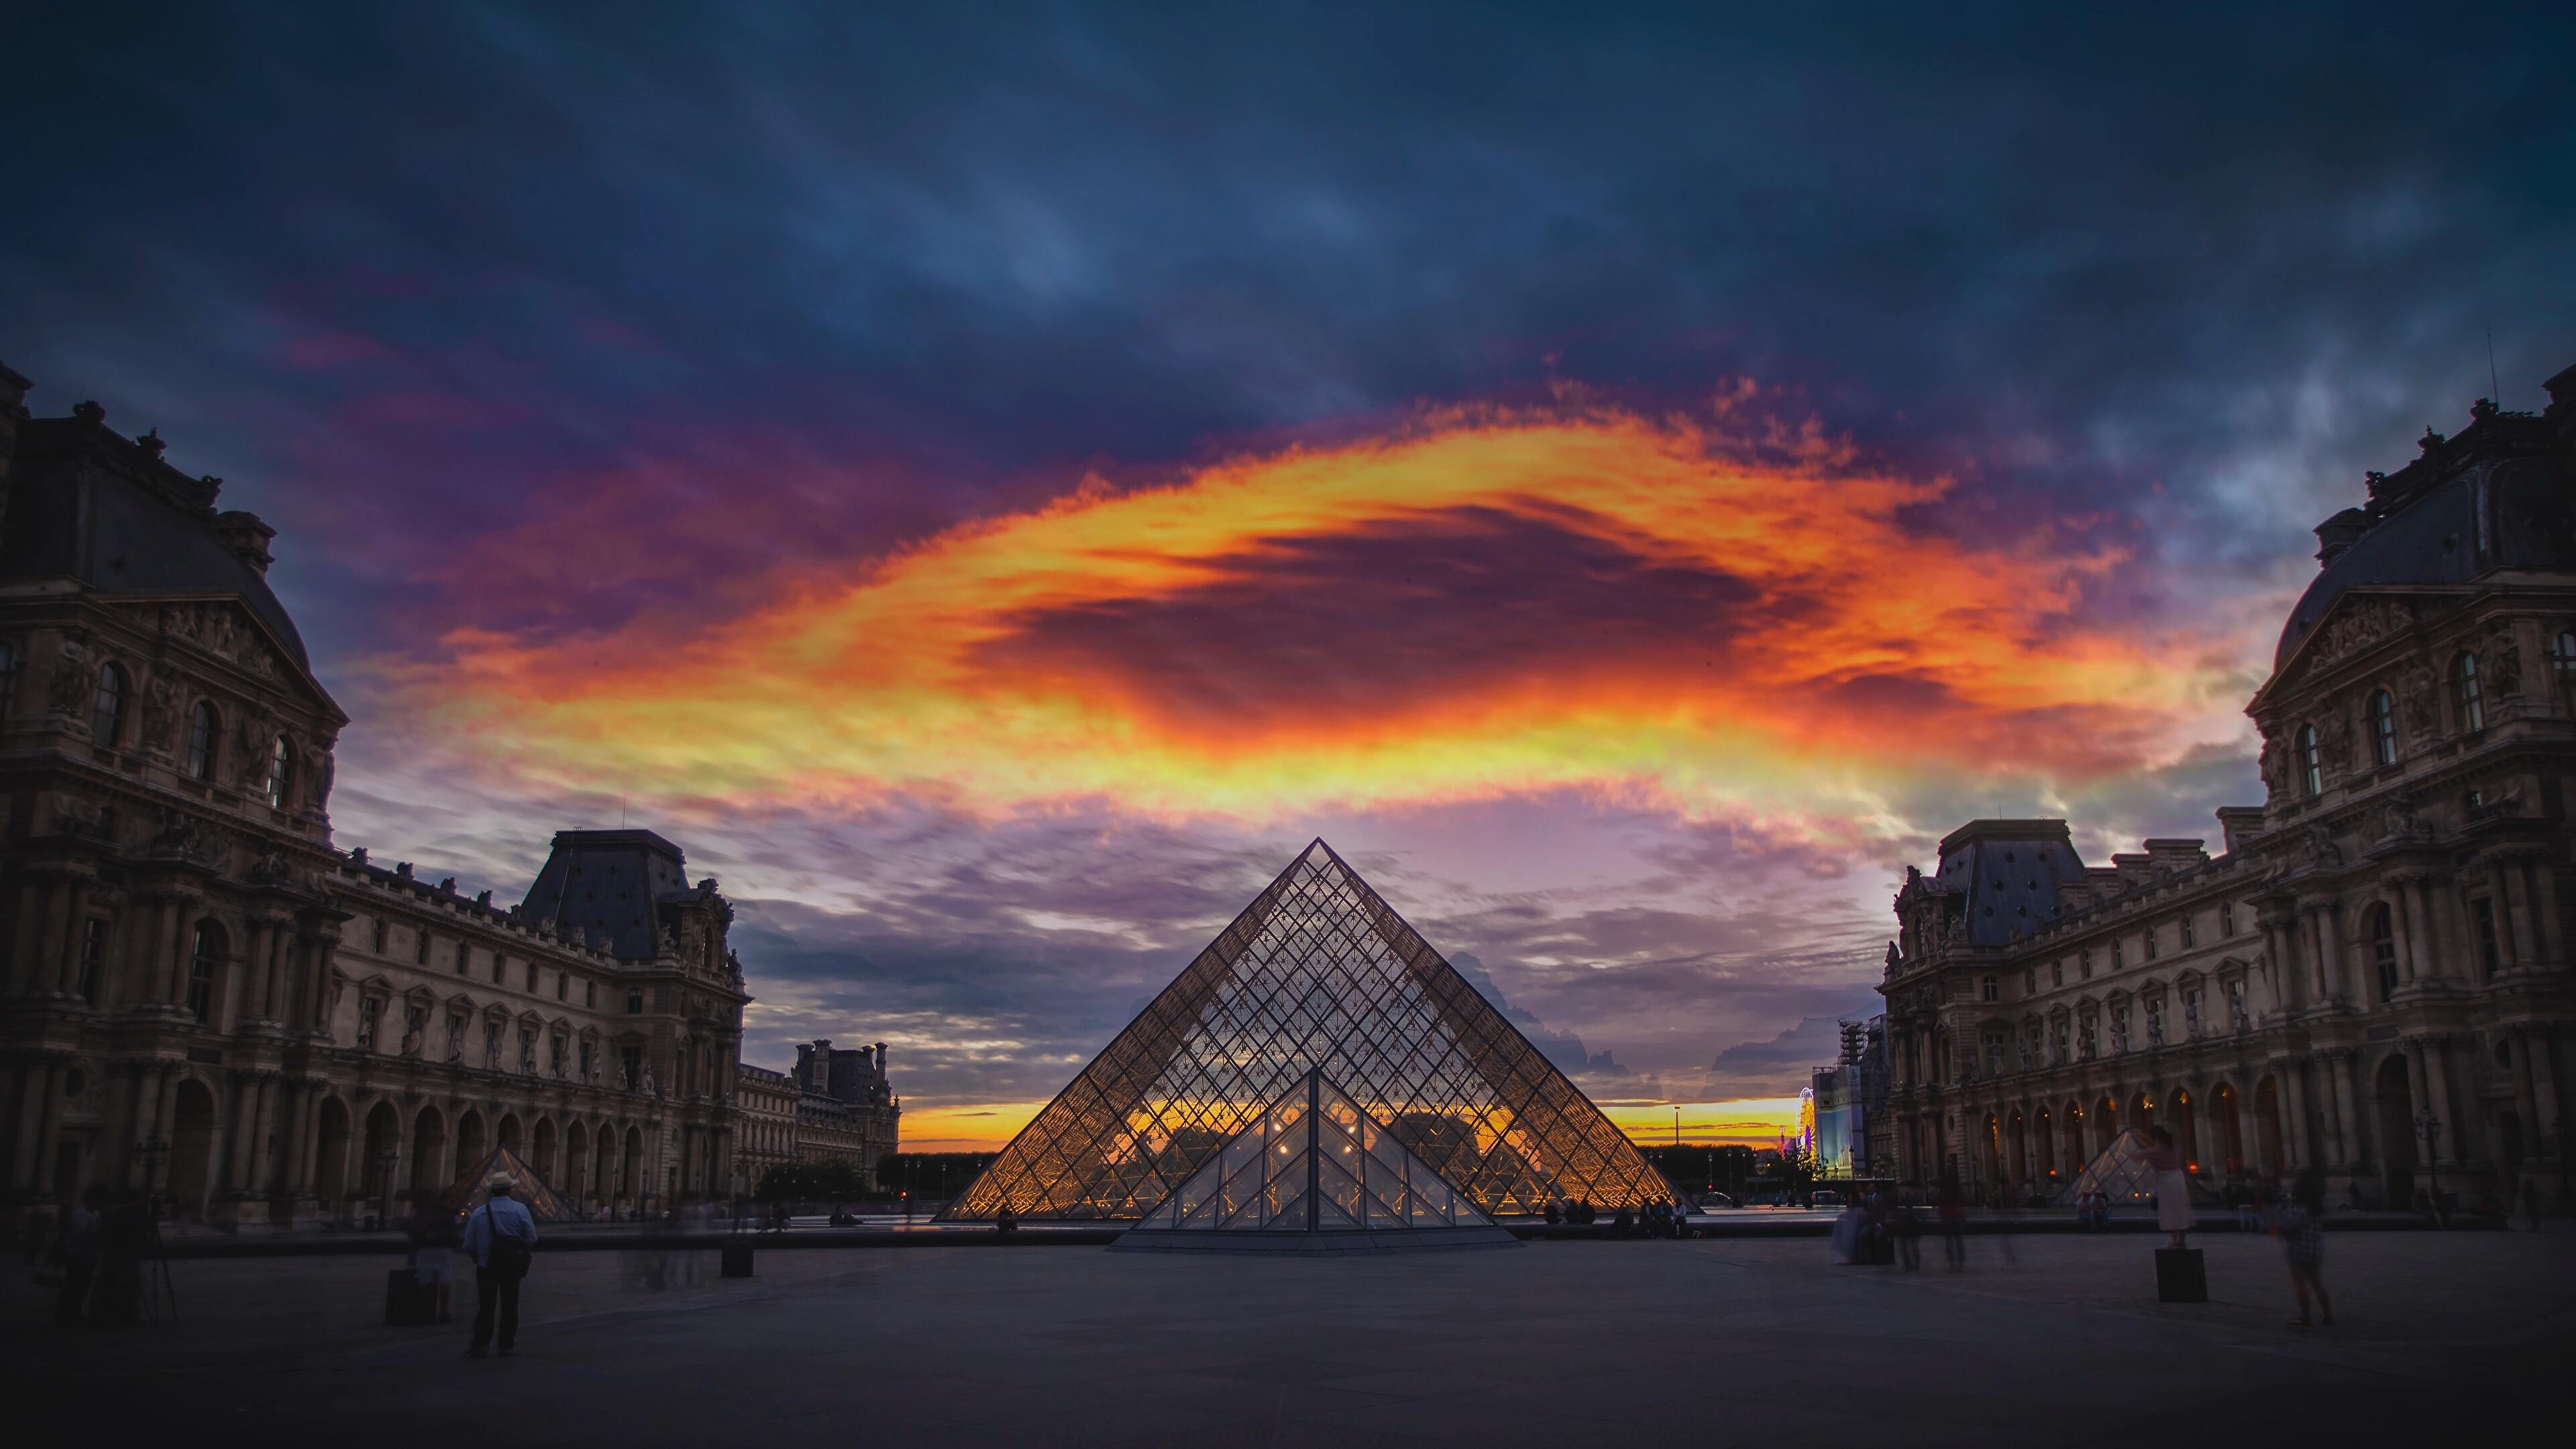 Iconic pyramid structure, Stunning architectural feat, Impressive Louvre photo, Breathtaking wallpaper, 3840x2160 4K Desktop